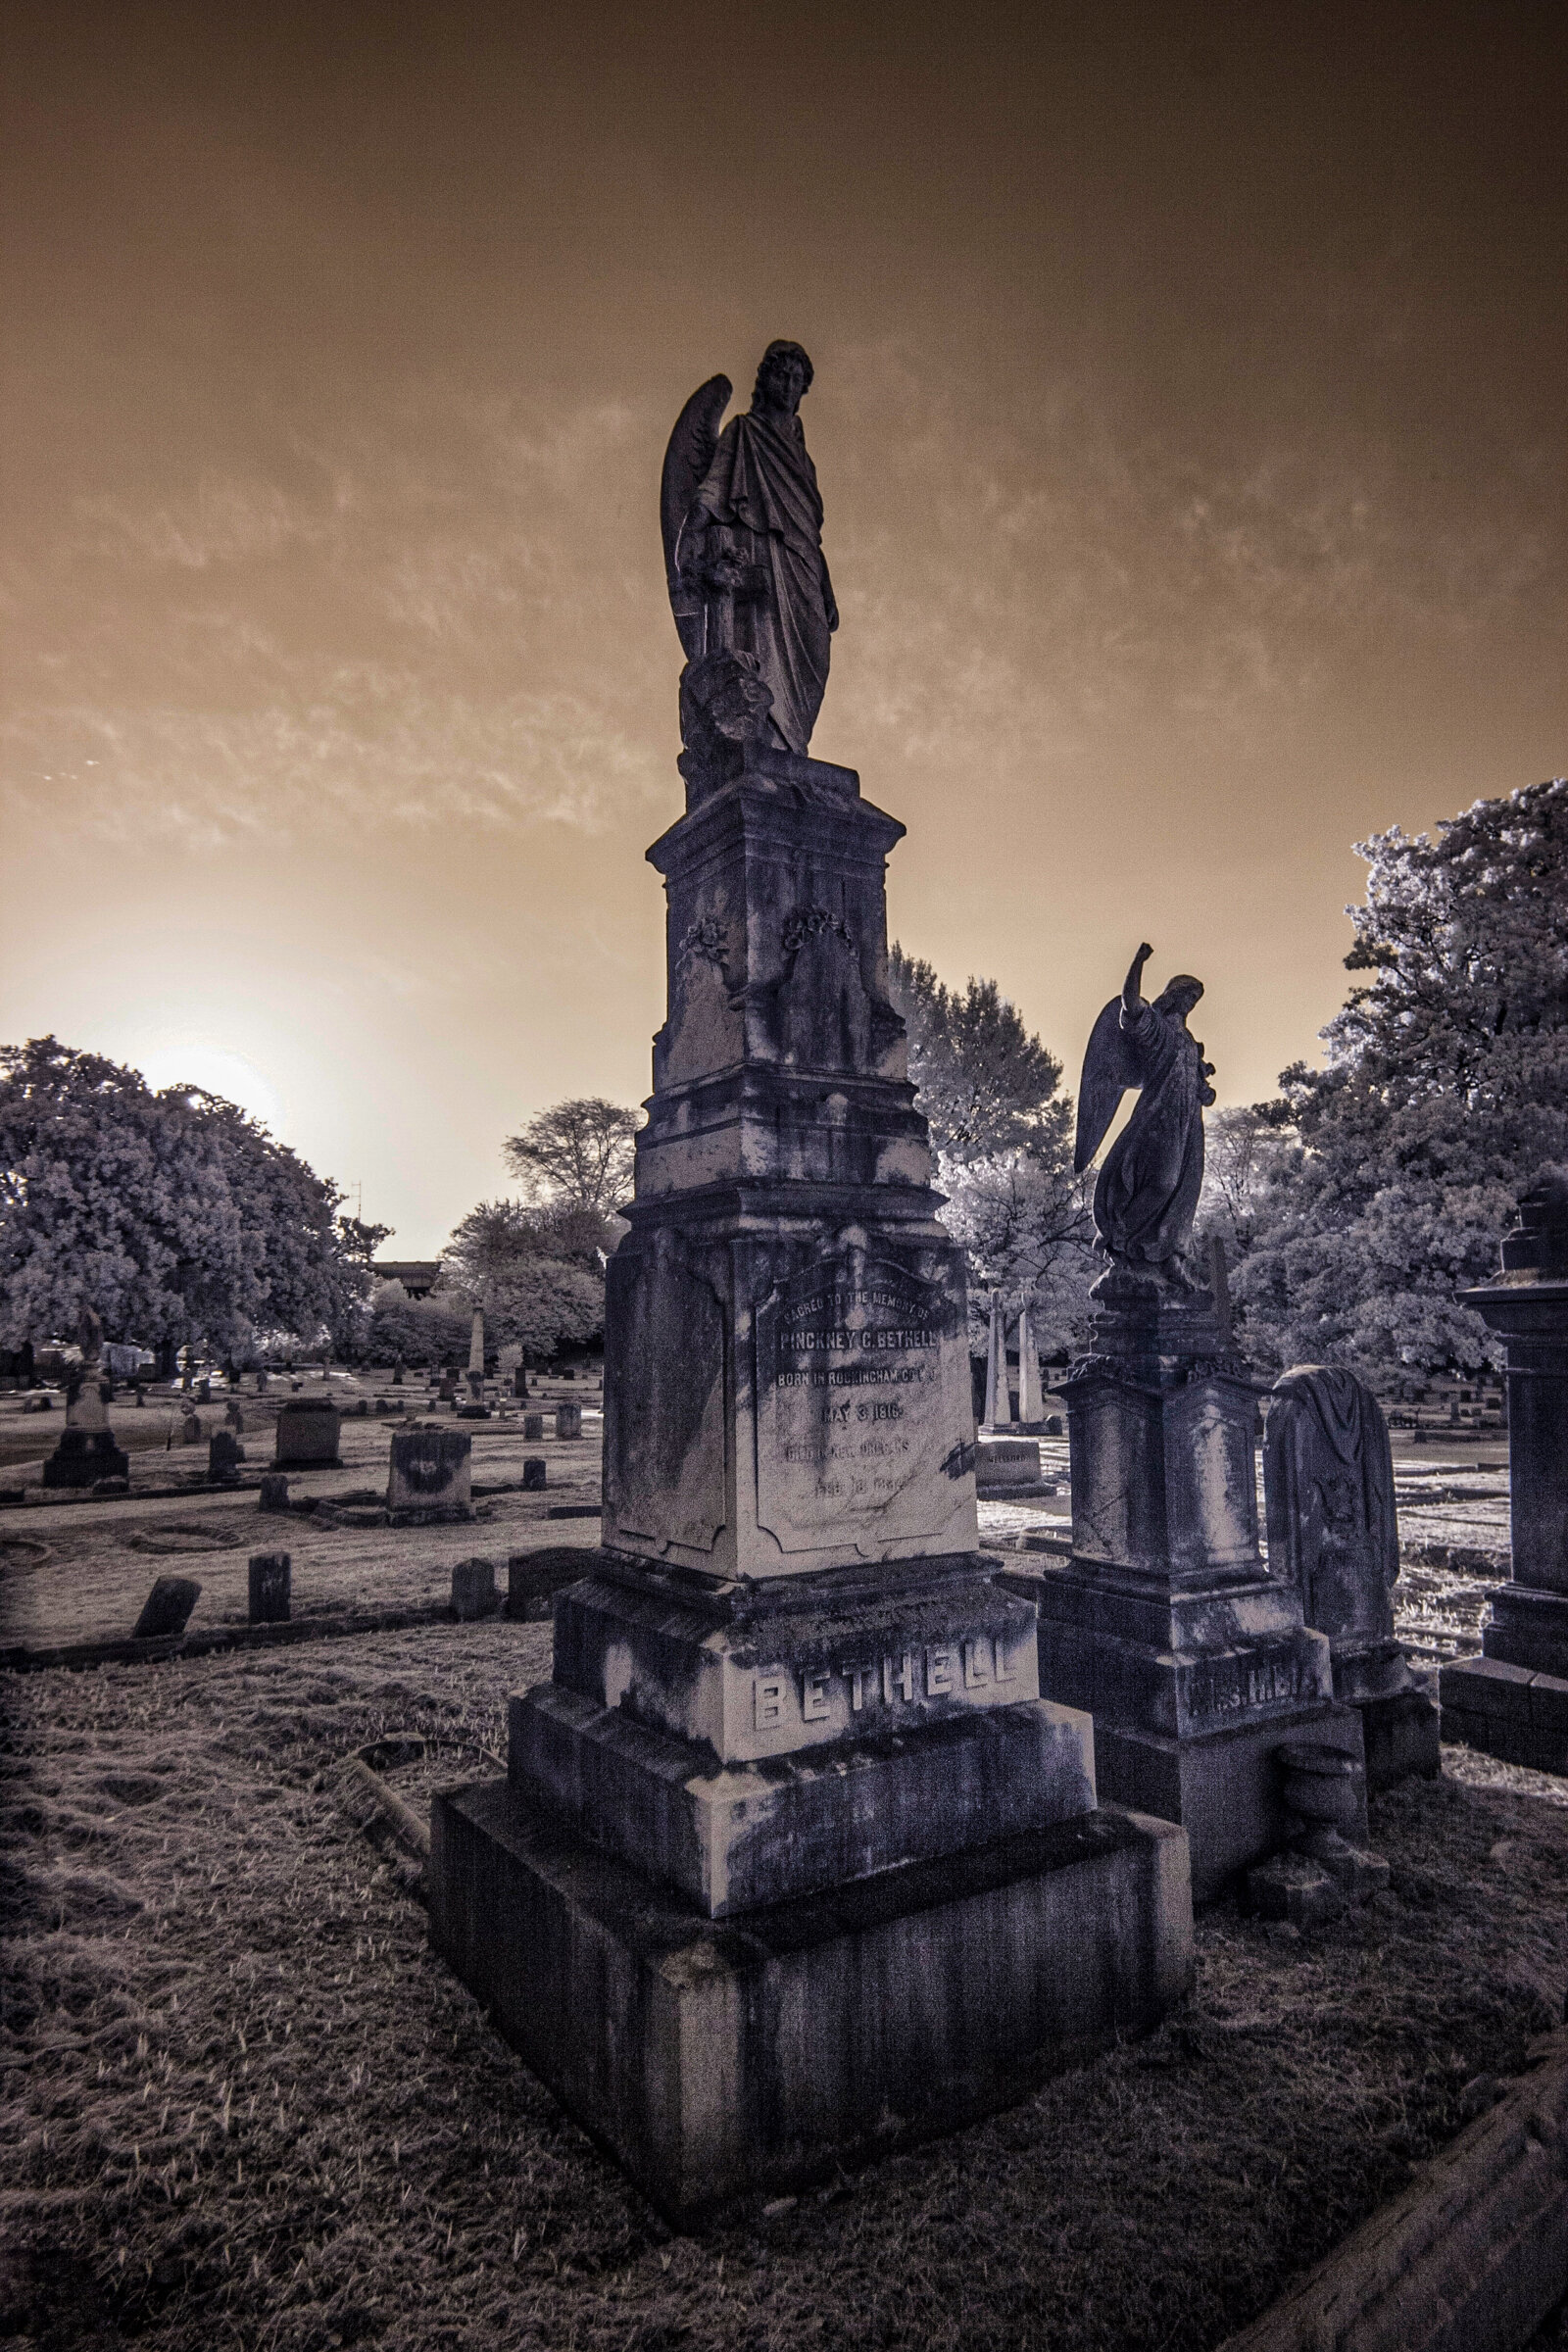  Elmwood Cemetery, Memphis, TN USA 